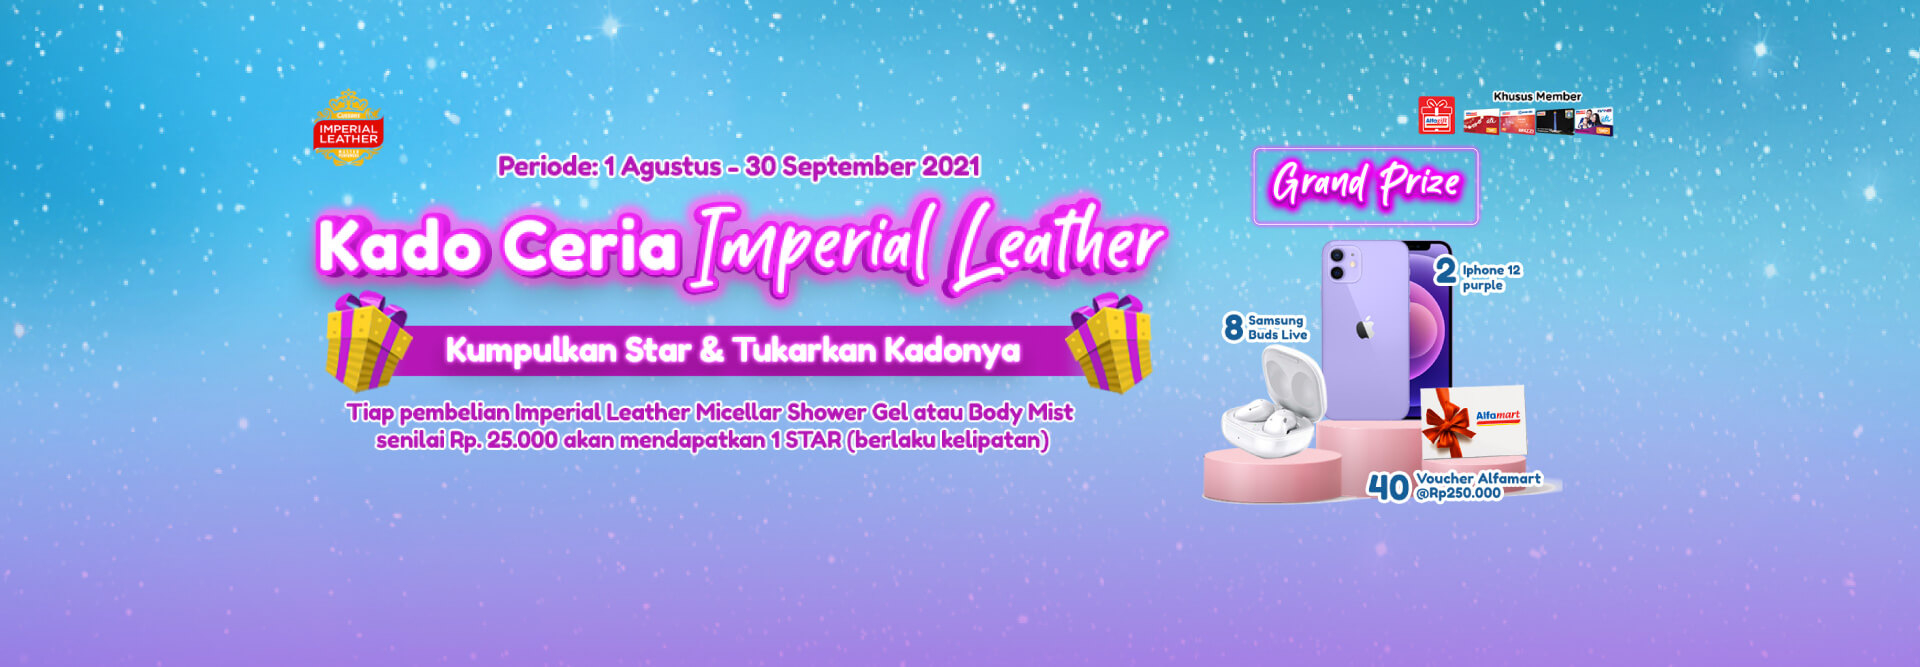 Promo Program Member - Kado Ceria Imperial Leather Alfamart